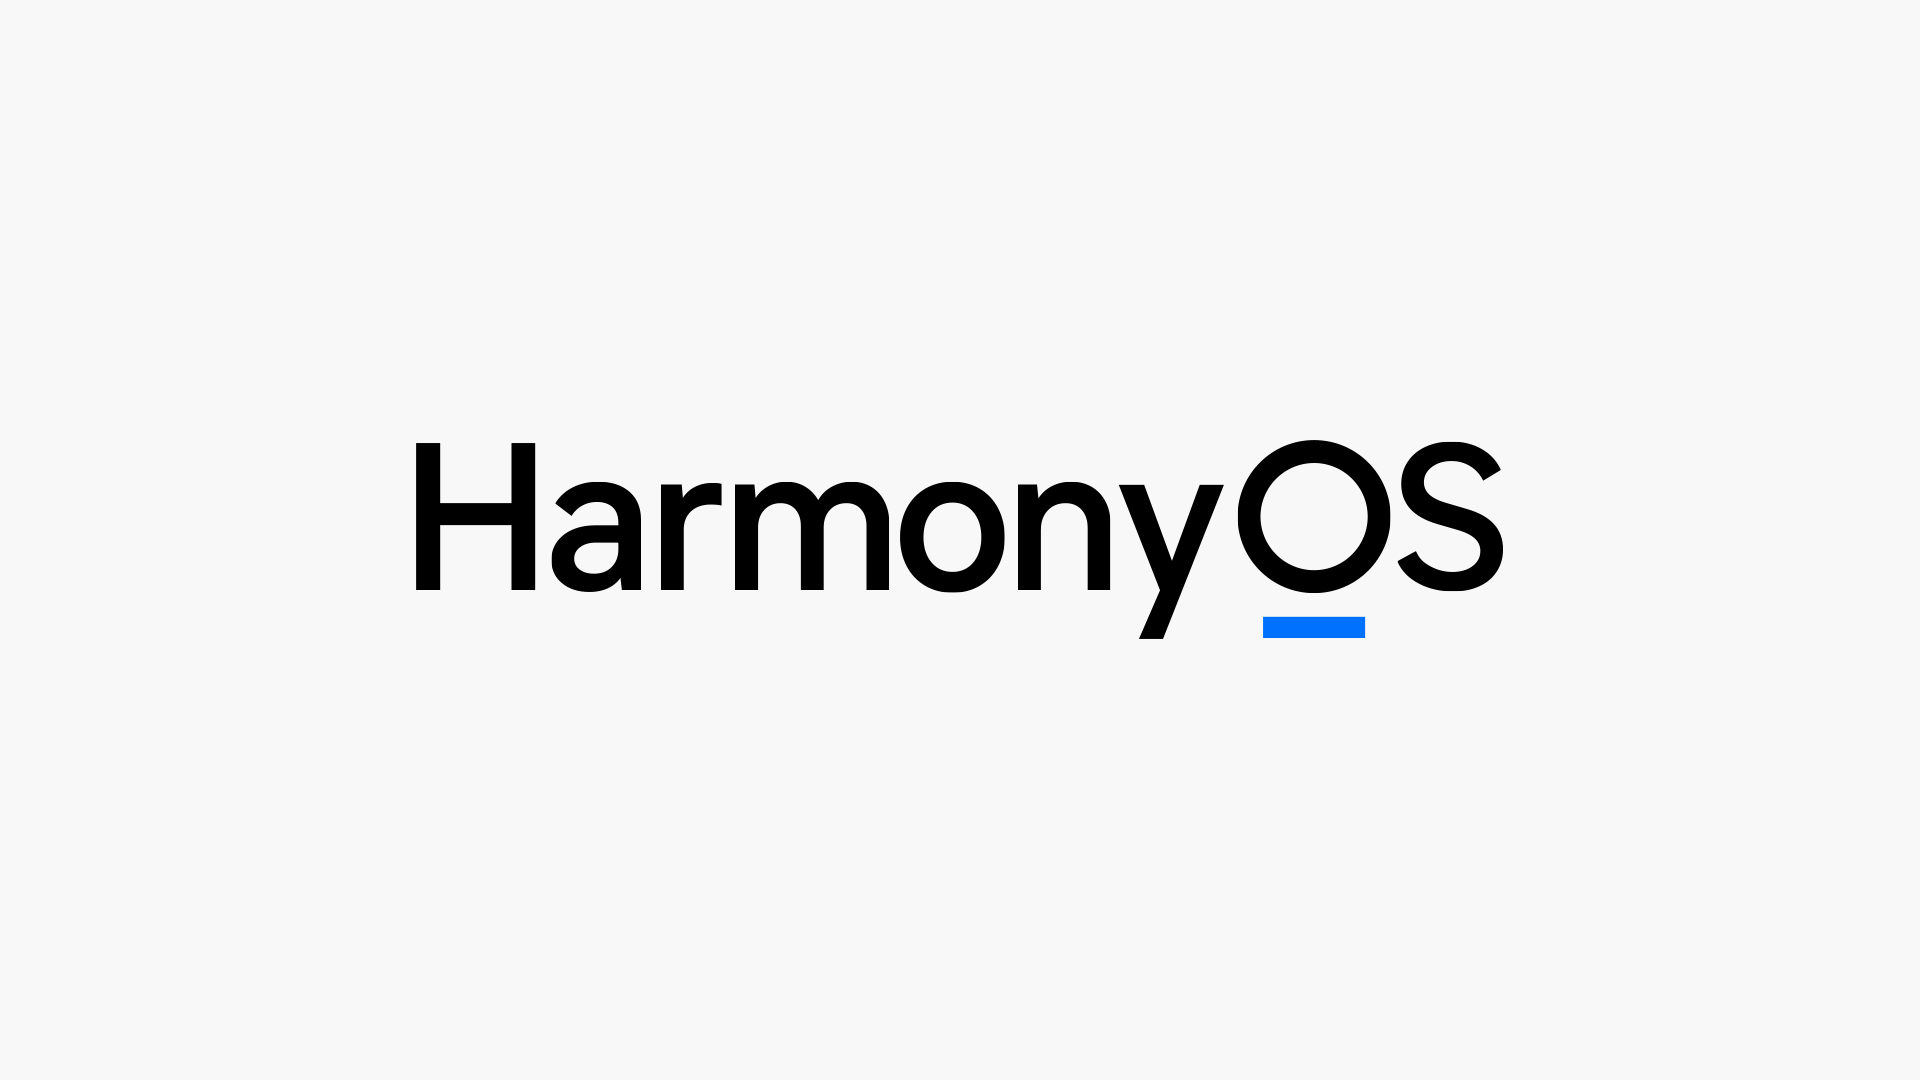 logo设计分享—华为鸿蒙 harmonyos 新logo发布,解读logo中的「37